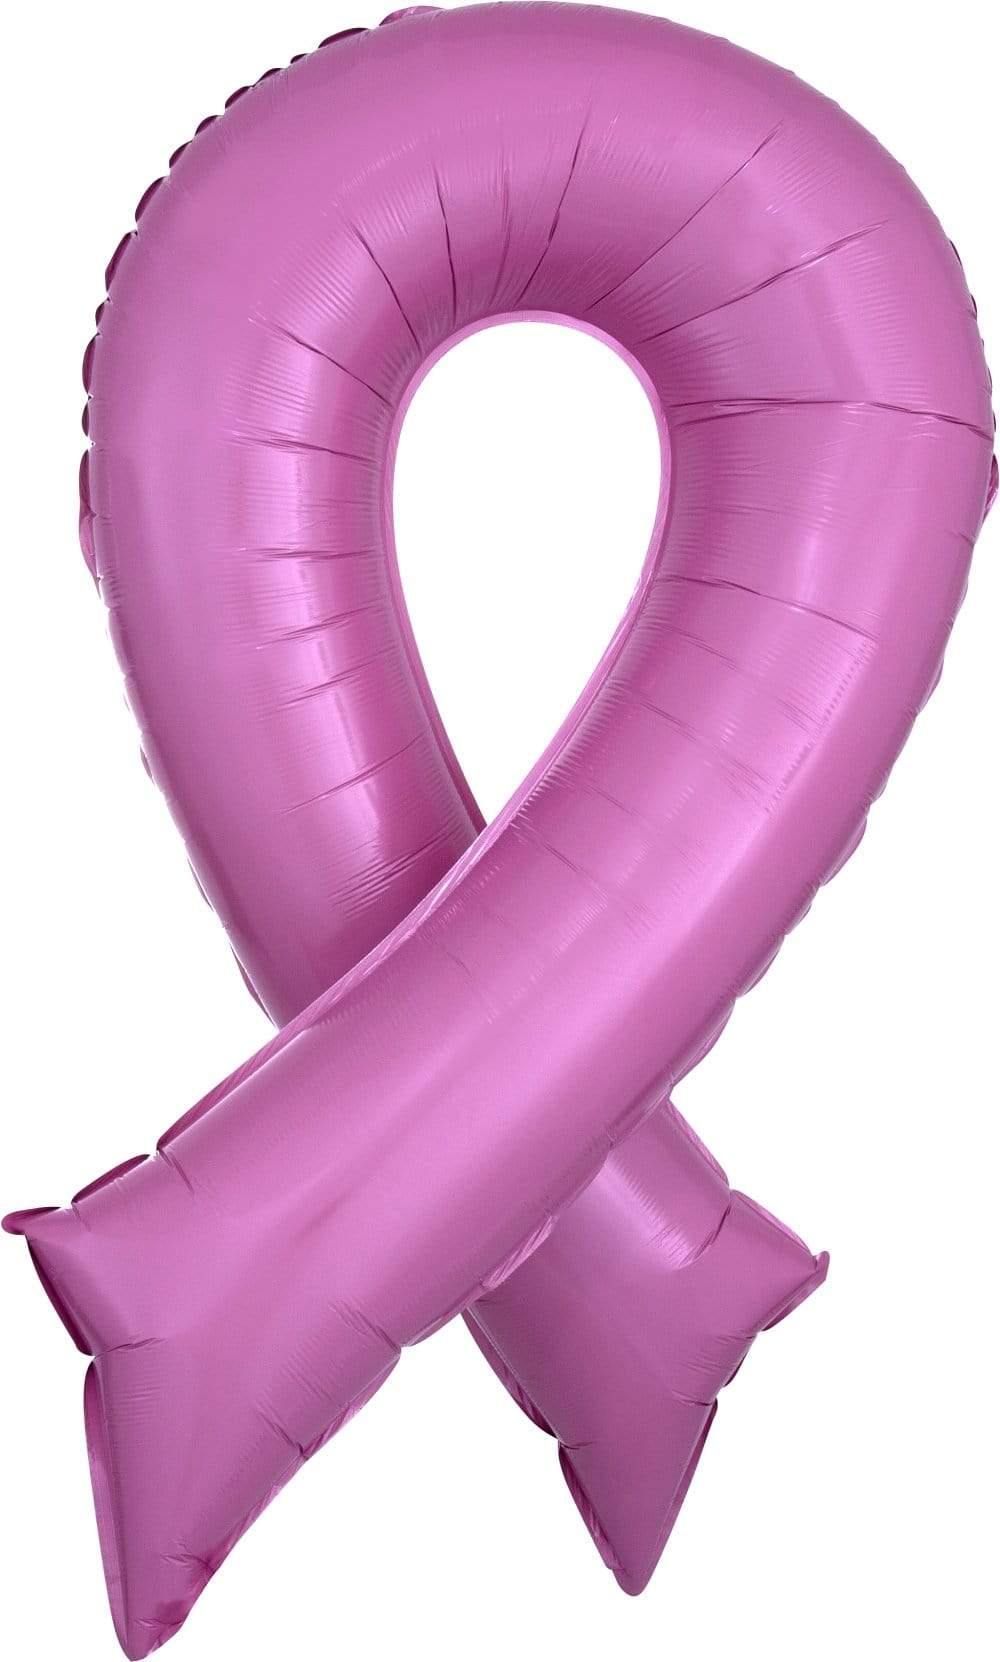 Breast Cancer Awareness Pink Ribbons Cupcake Pics 12 Pack